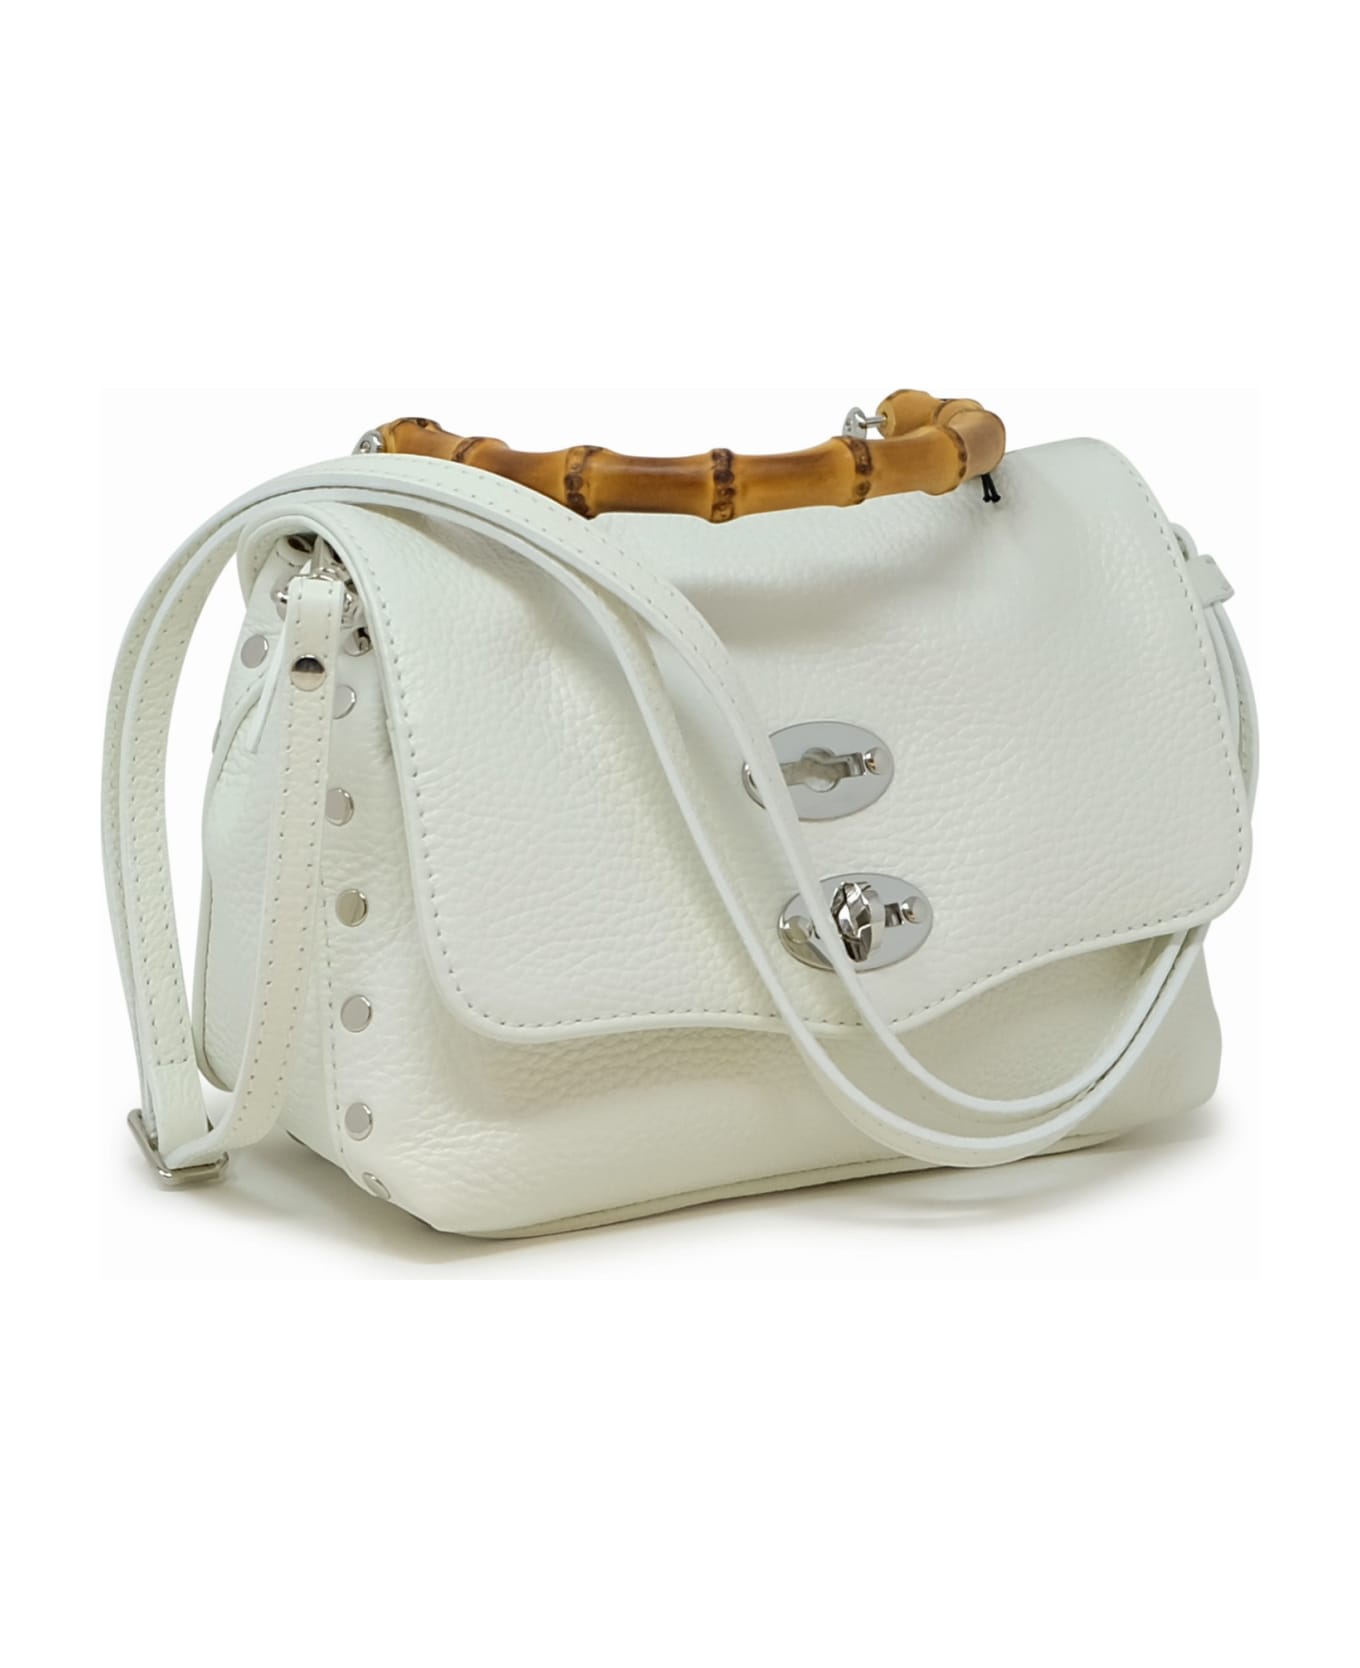 Zanellato 068010-0950000-z1190 White Postina Daily Baby Bamboo Leather Handbag - WHITE